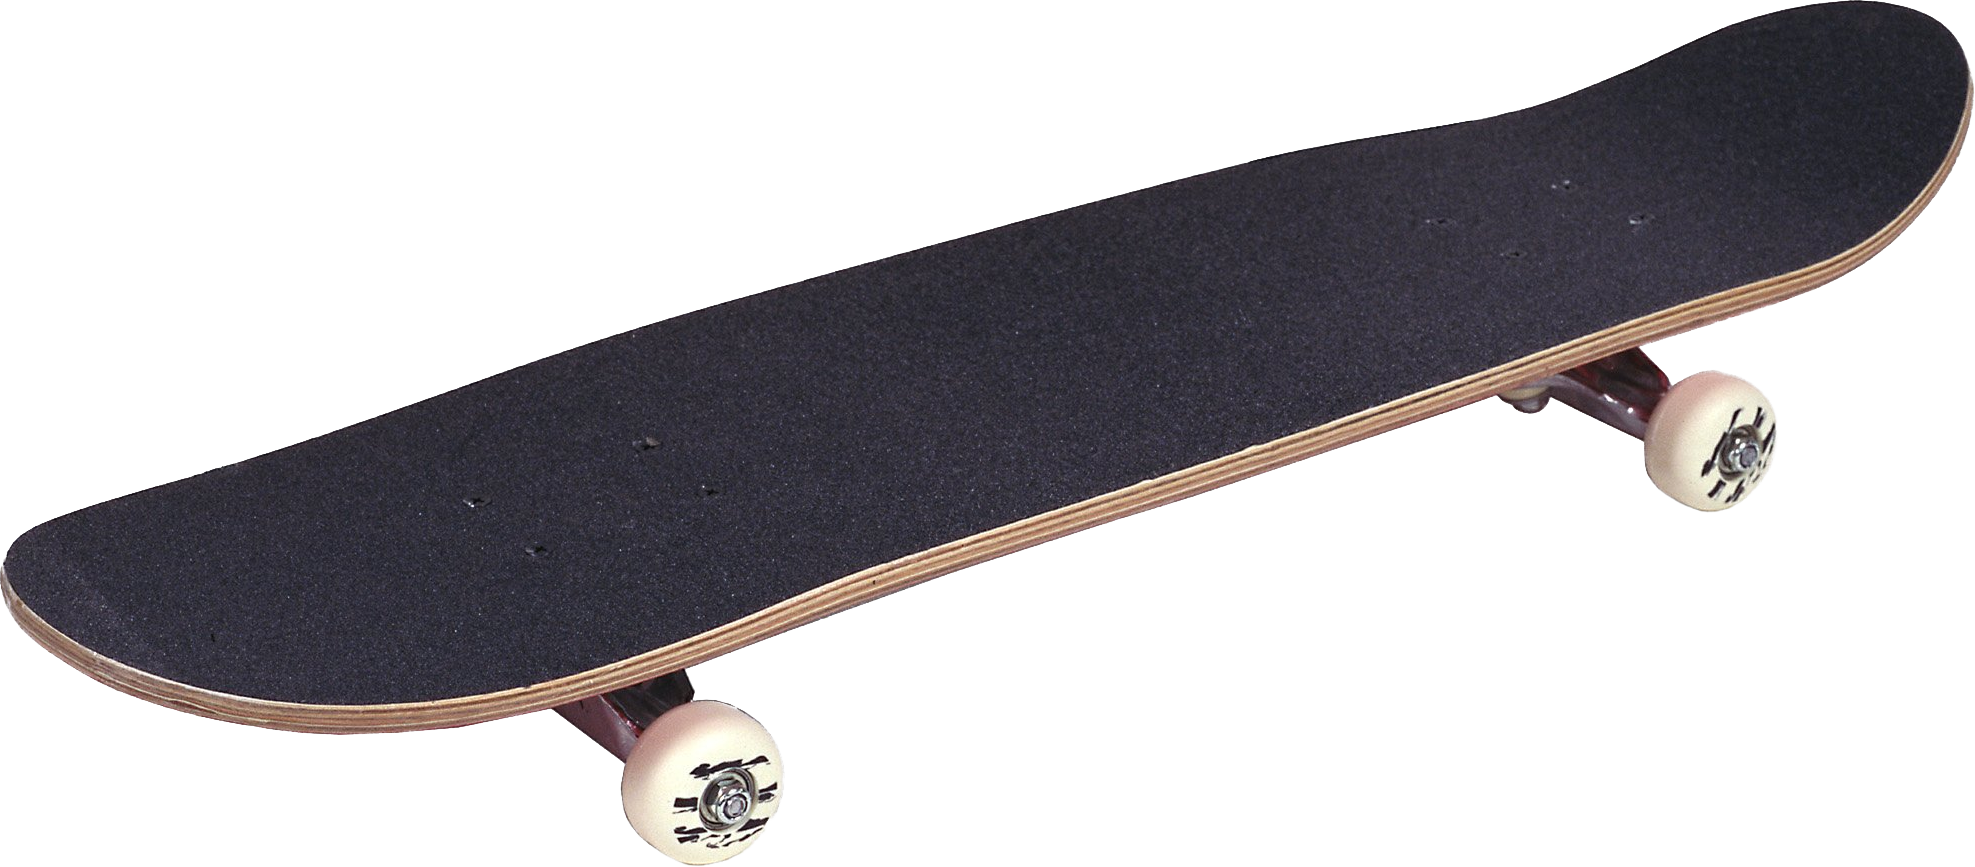 Skateboard Png Image - Skateboard, Transparent background PNG HD thumbnail